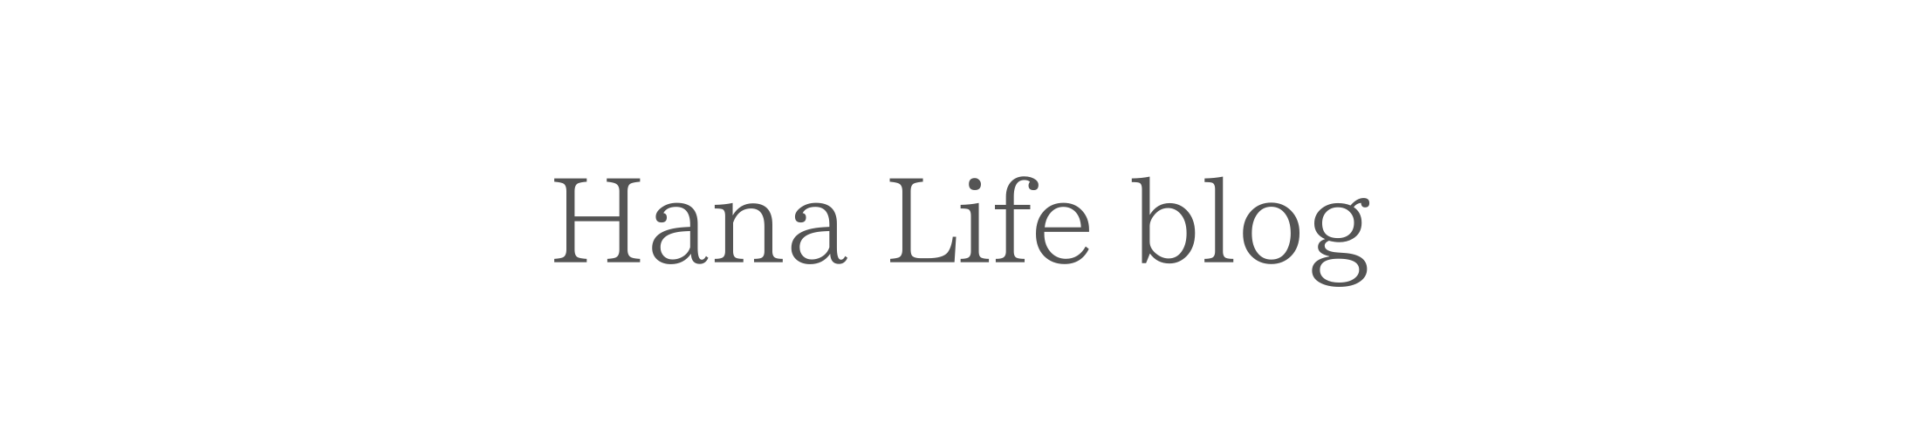 Hana Life blog